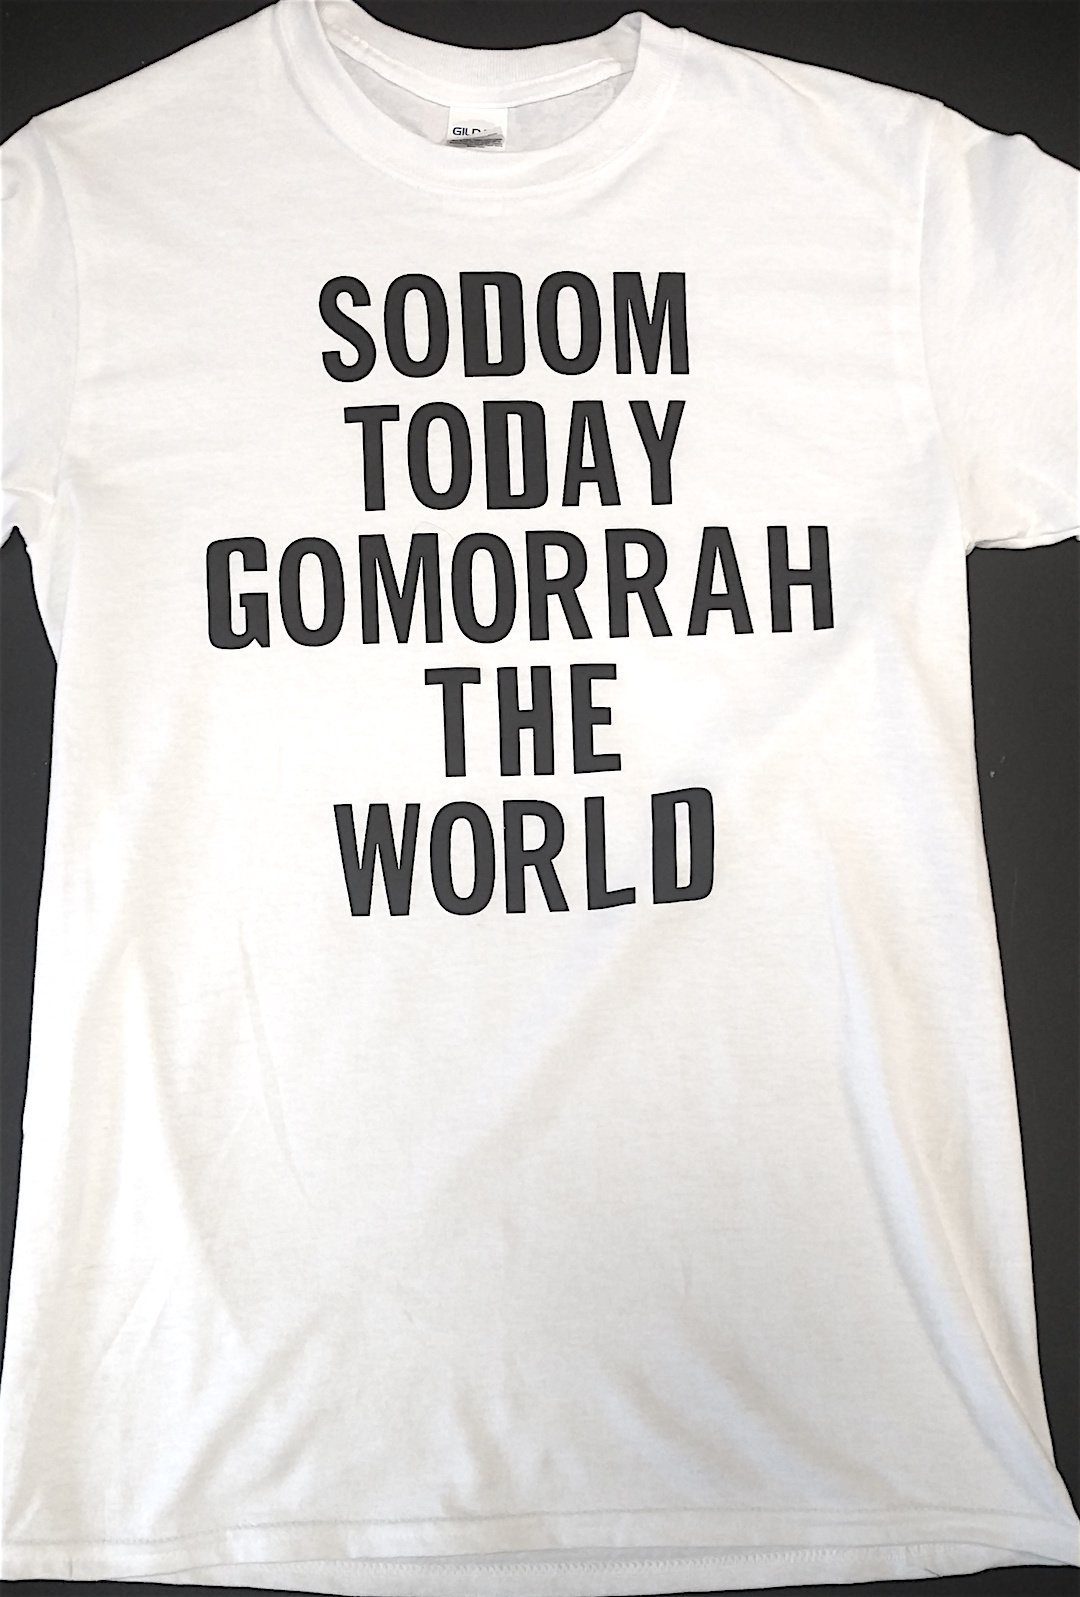 SODOM TODAY GOMORRAH THE WORLD (White)